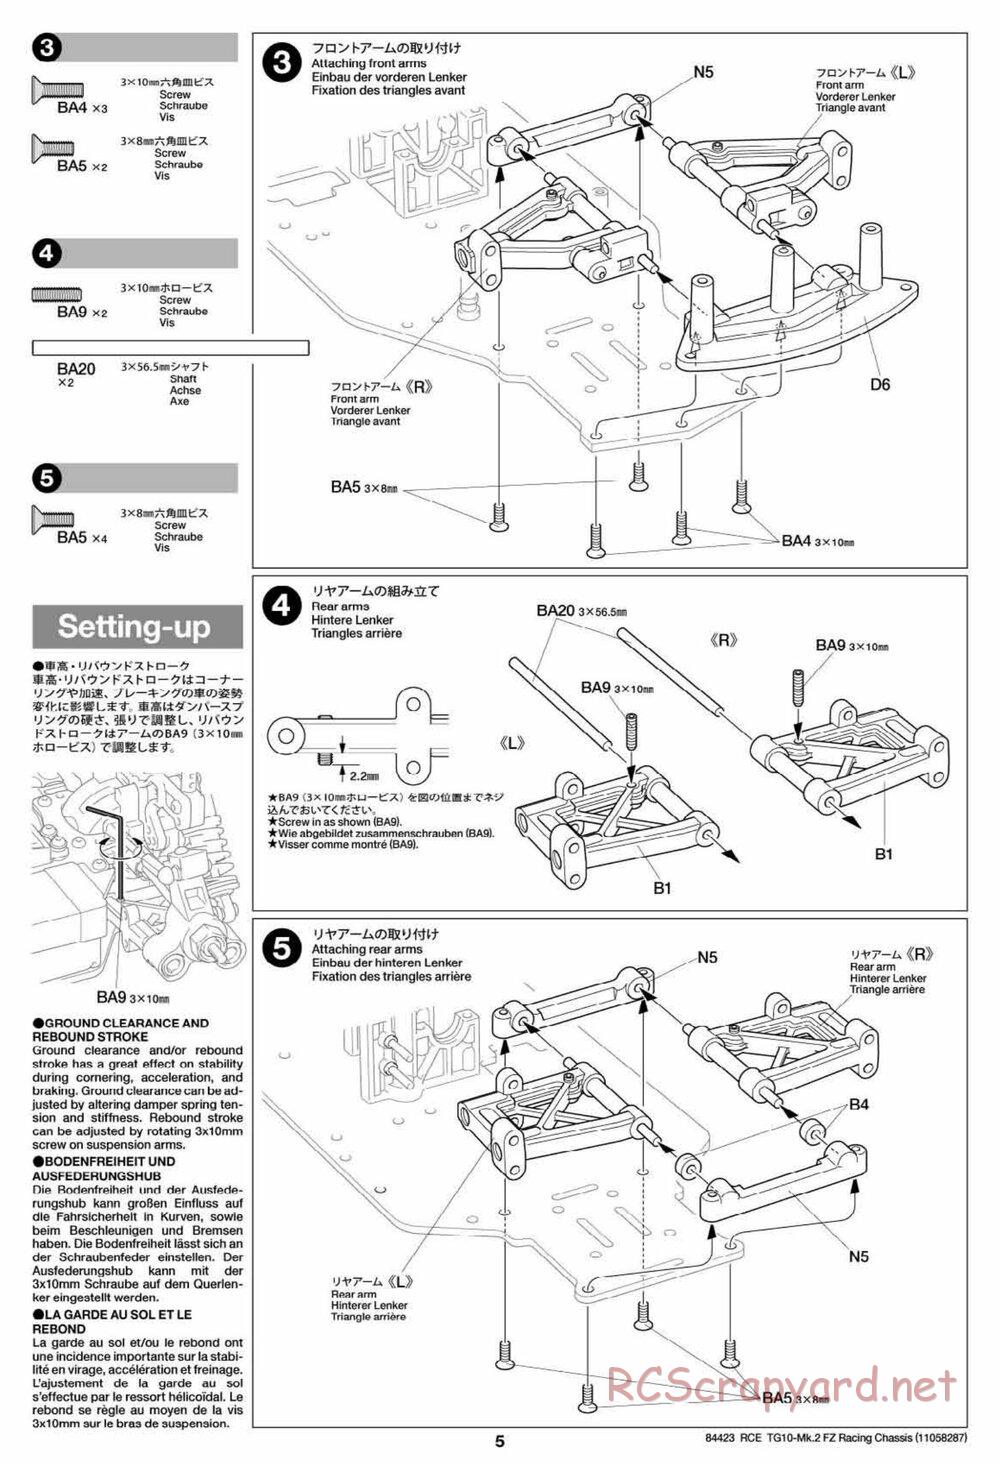 Tamiya - TG10 Mk.2 FZ Racing Chassis - Manual - Page 5